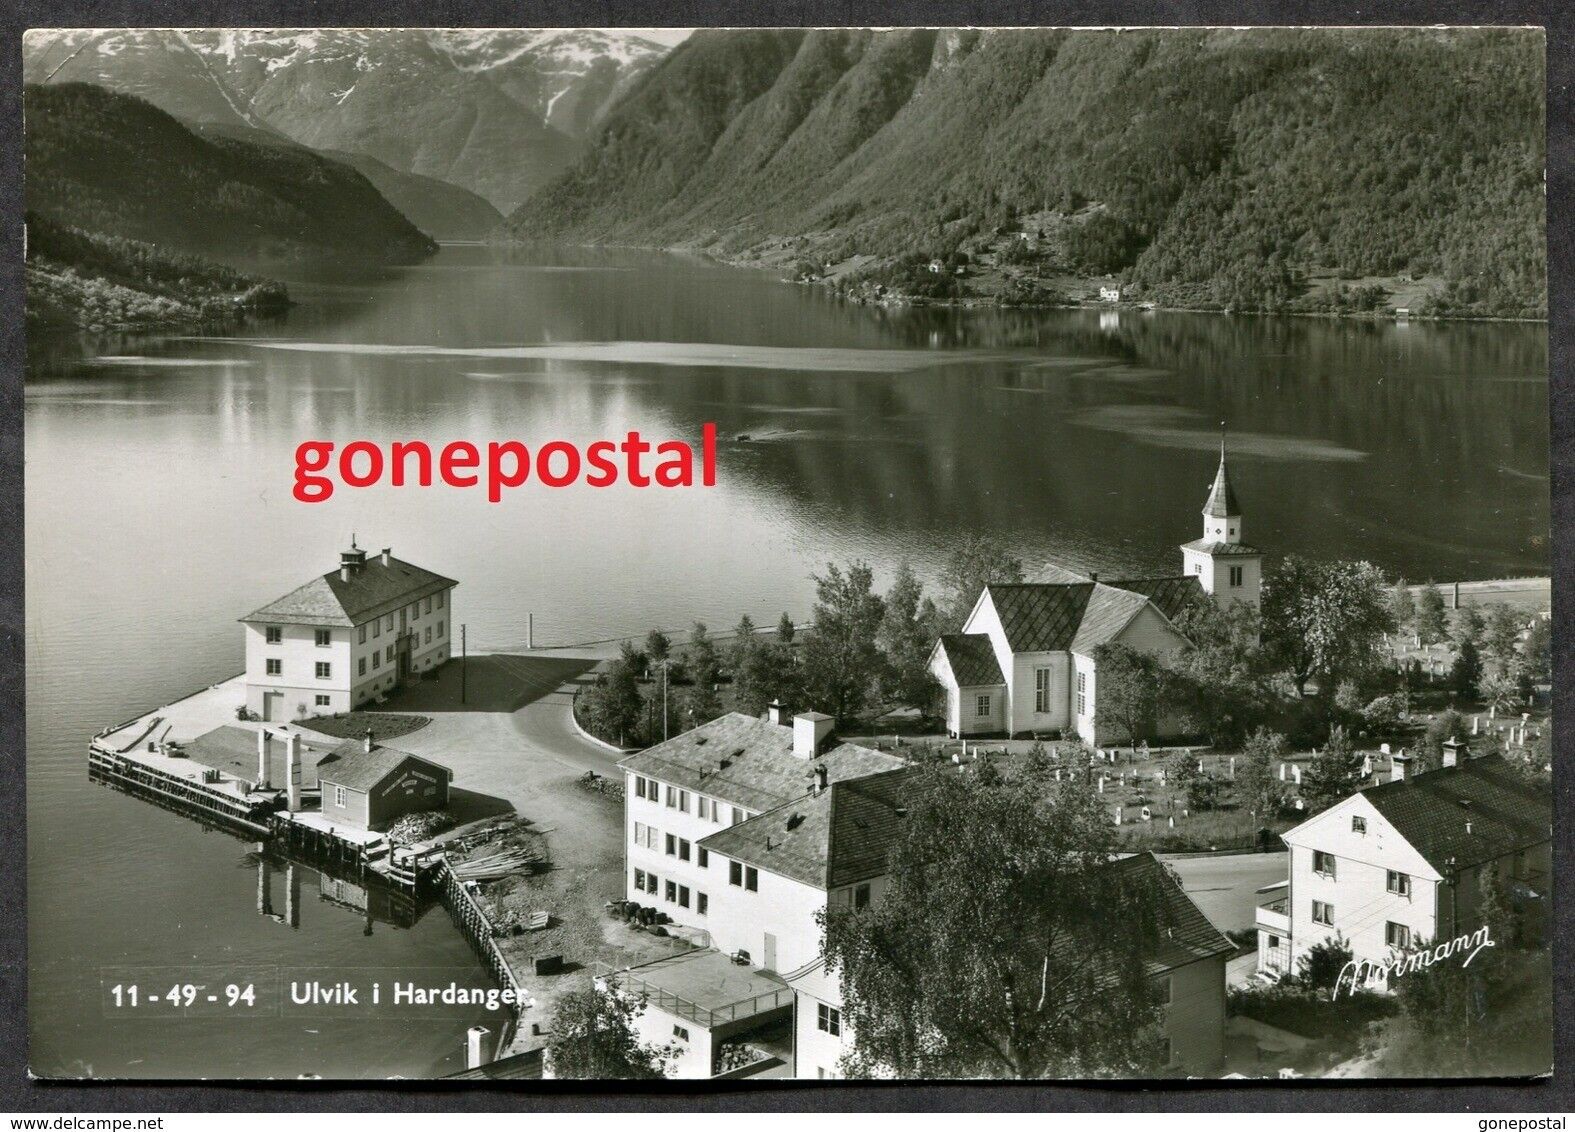 Norway ULVIK i Hardanger Air View 1956 Real Photo Postcard sent to Canada